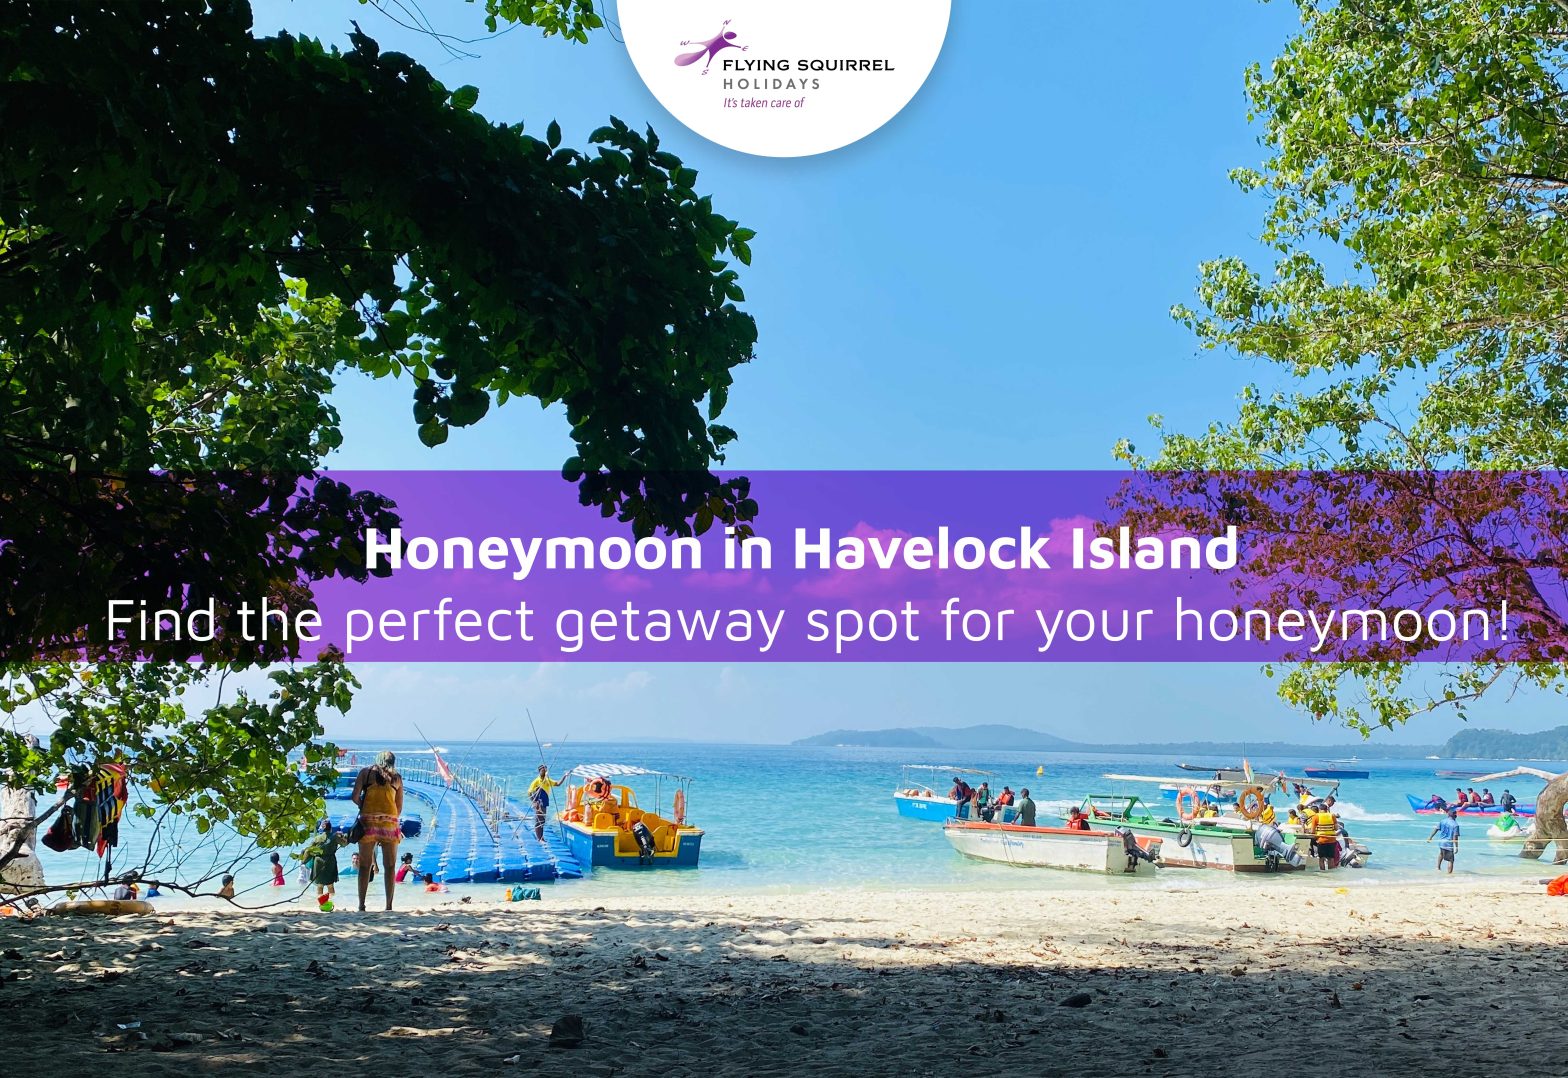 Honeymoon in Havelock Island: Find the perfect getaway spot for your honeymoon!